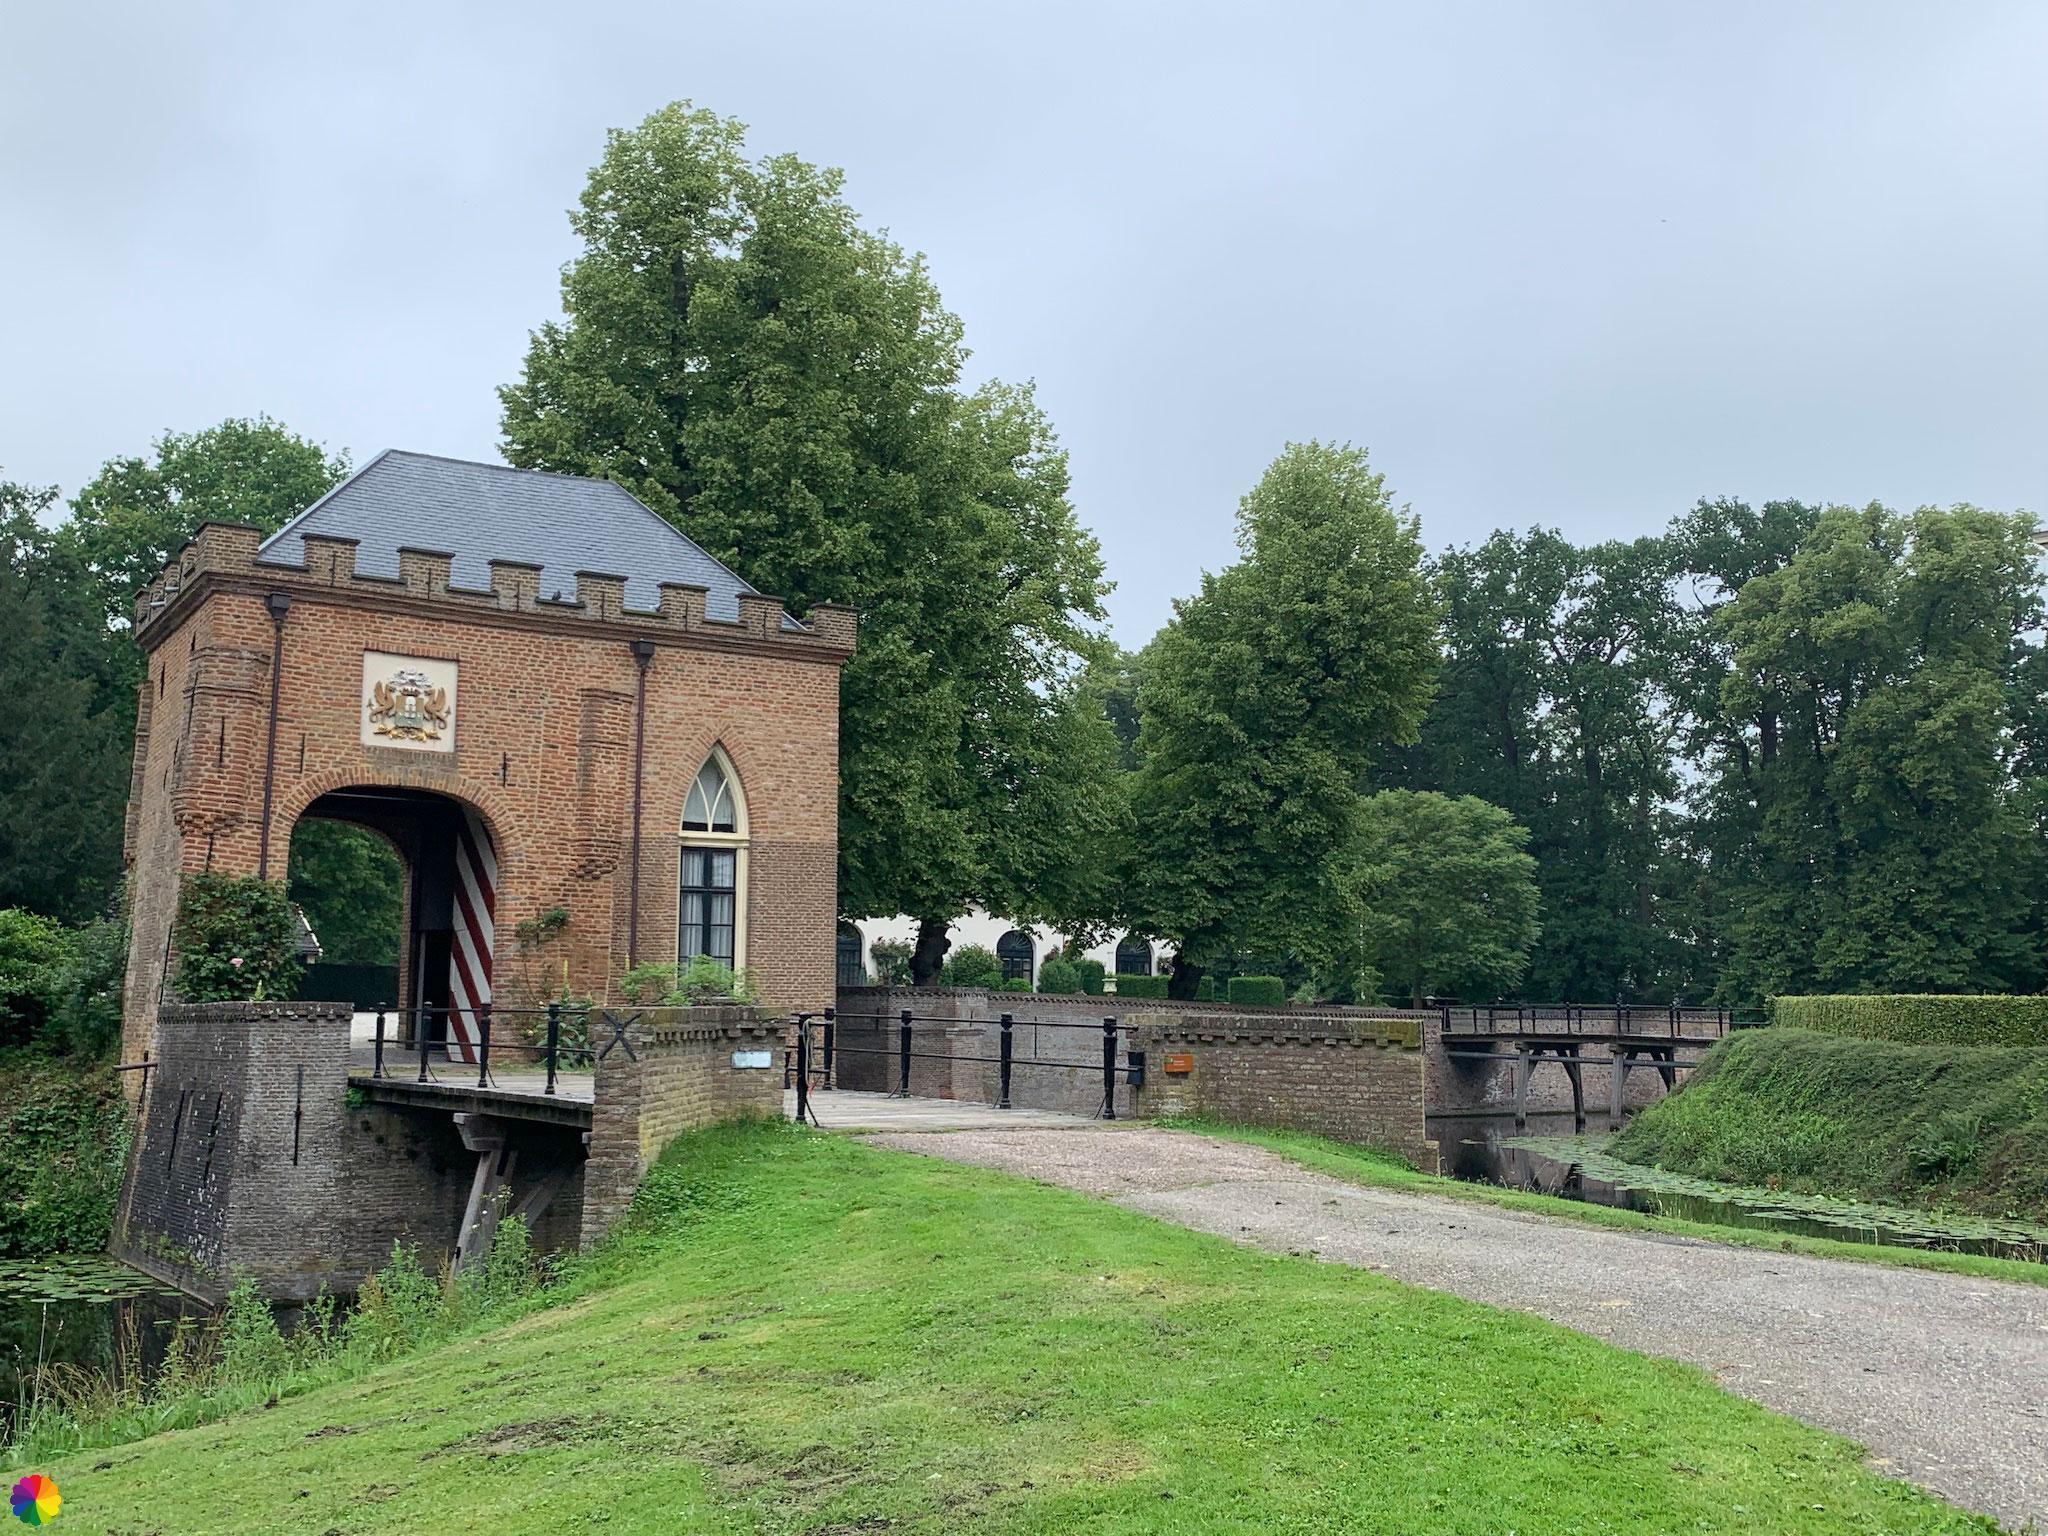 Gate at Soelen castle